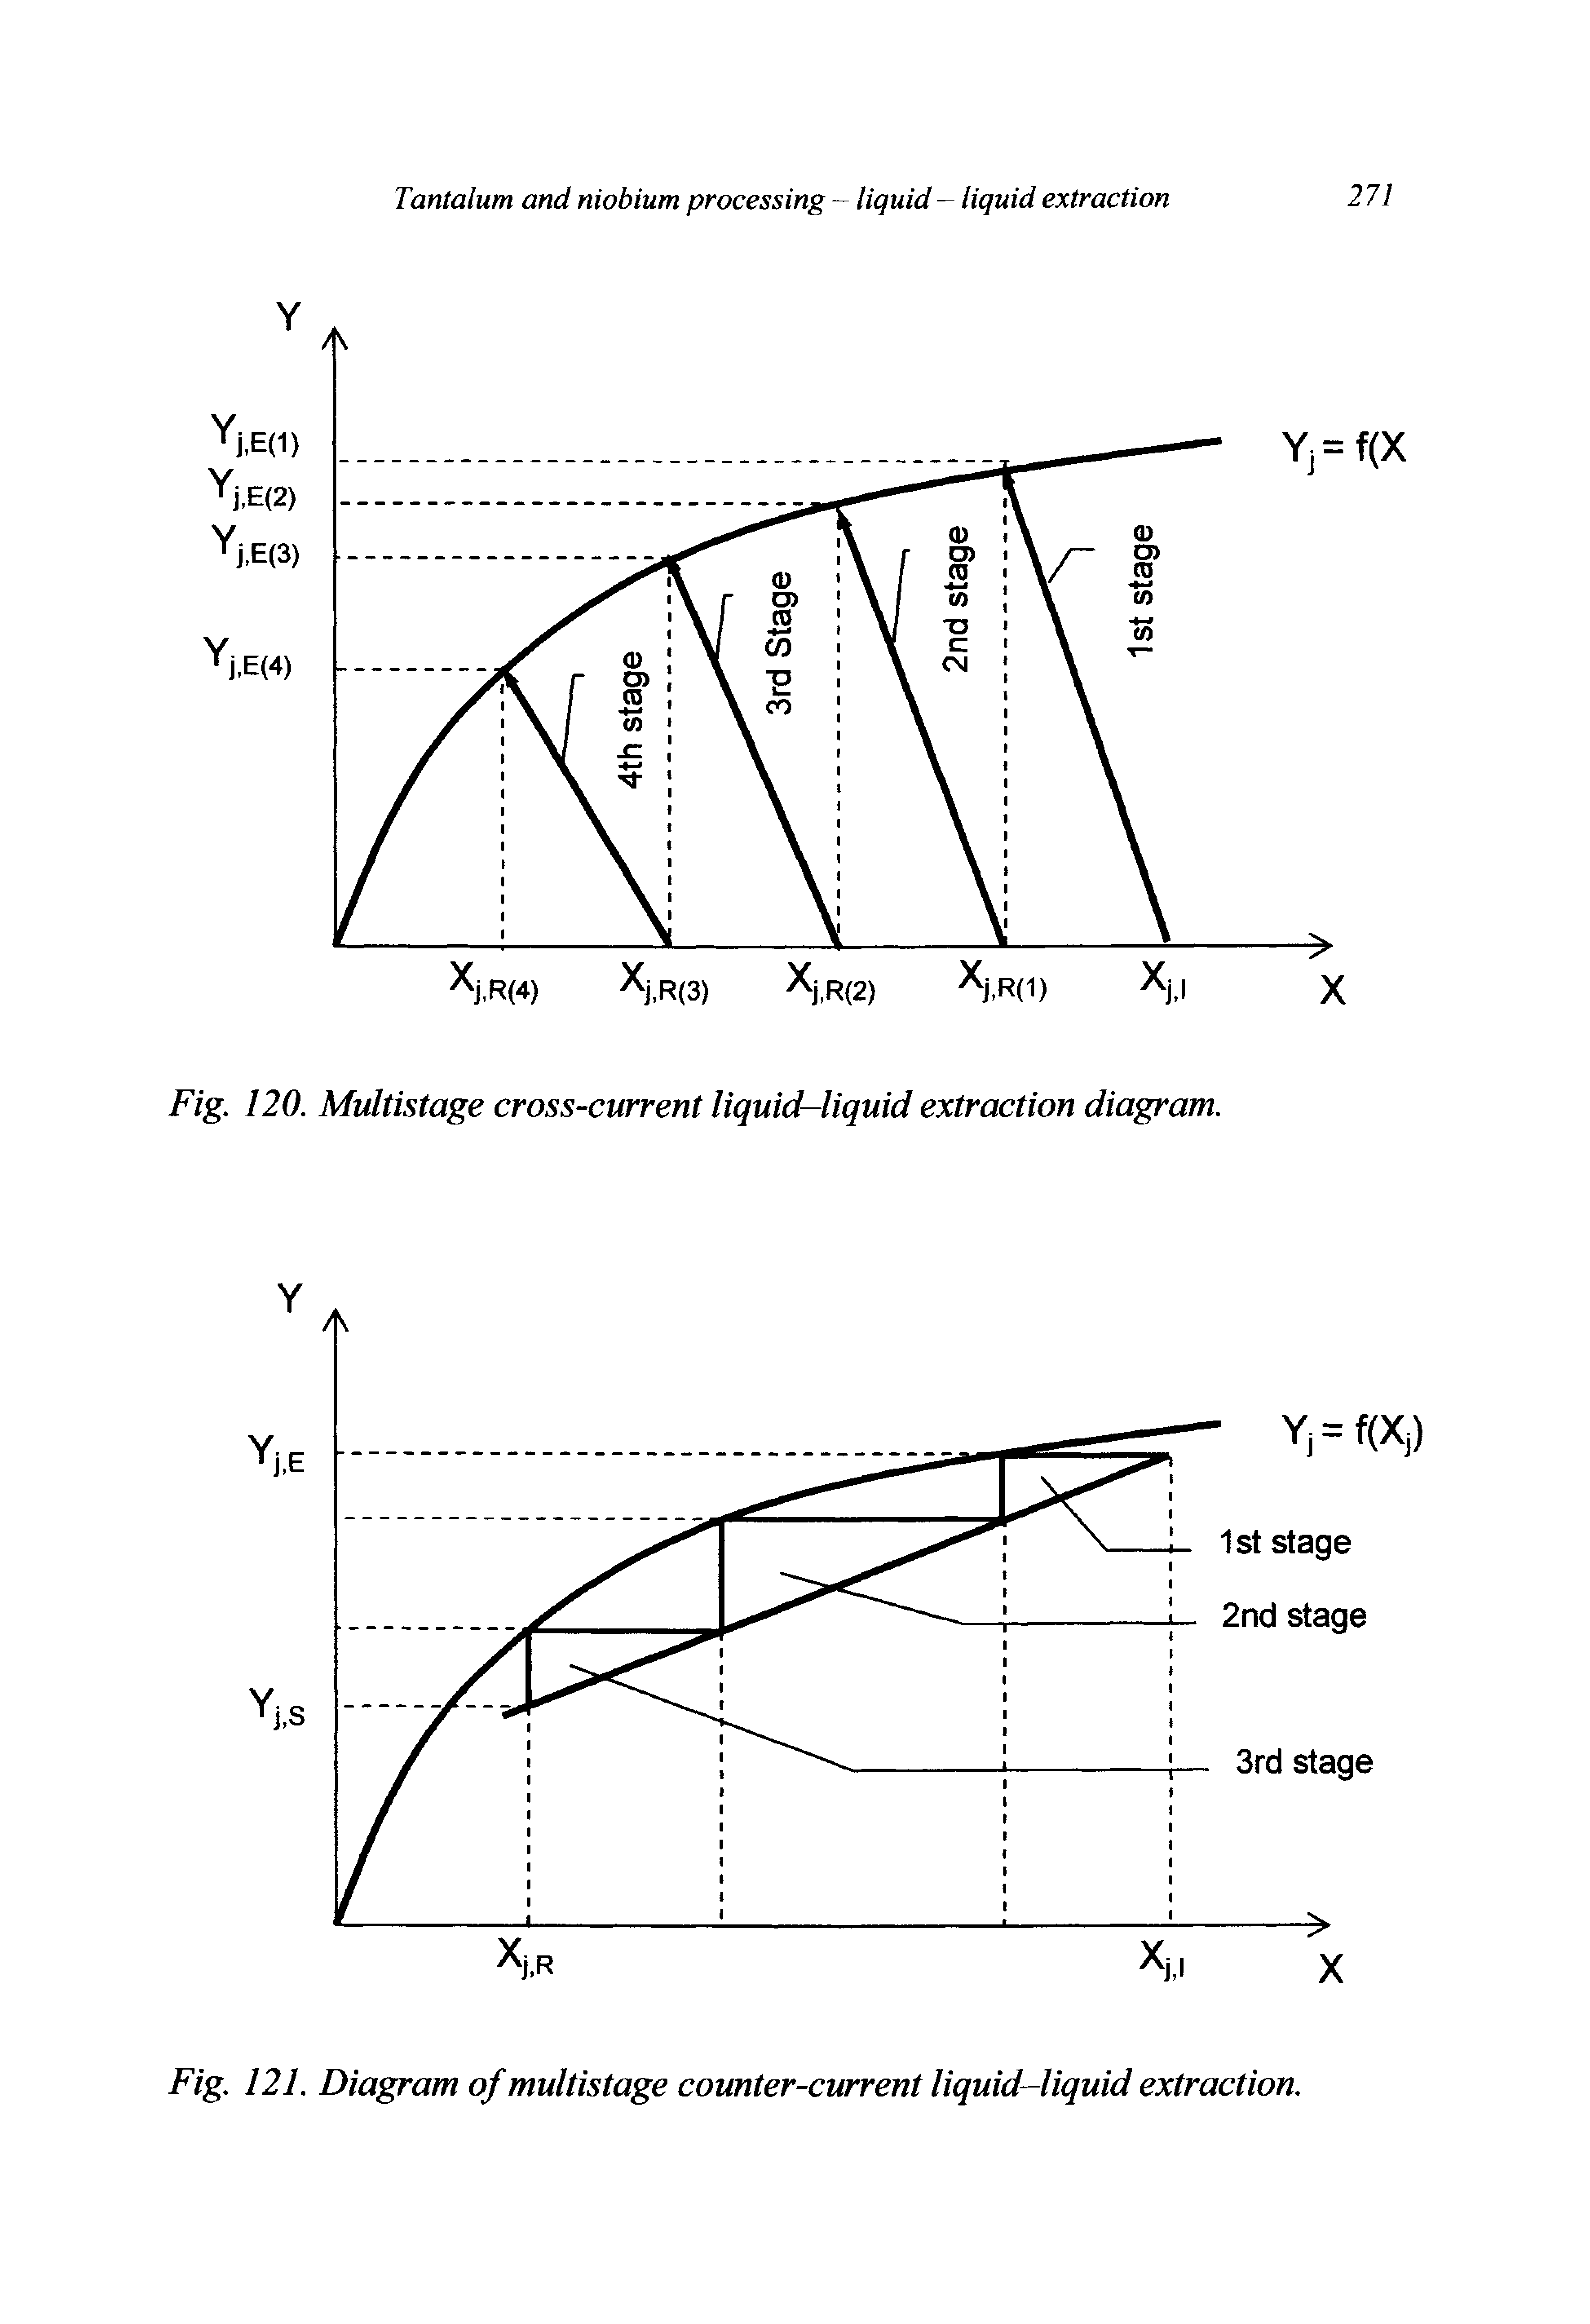 Fig. 121. Diagram of multistage counter-current liquid-liquid extraction.